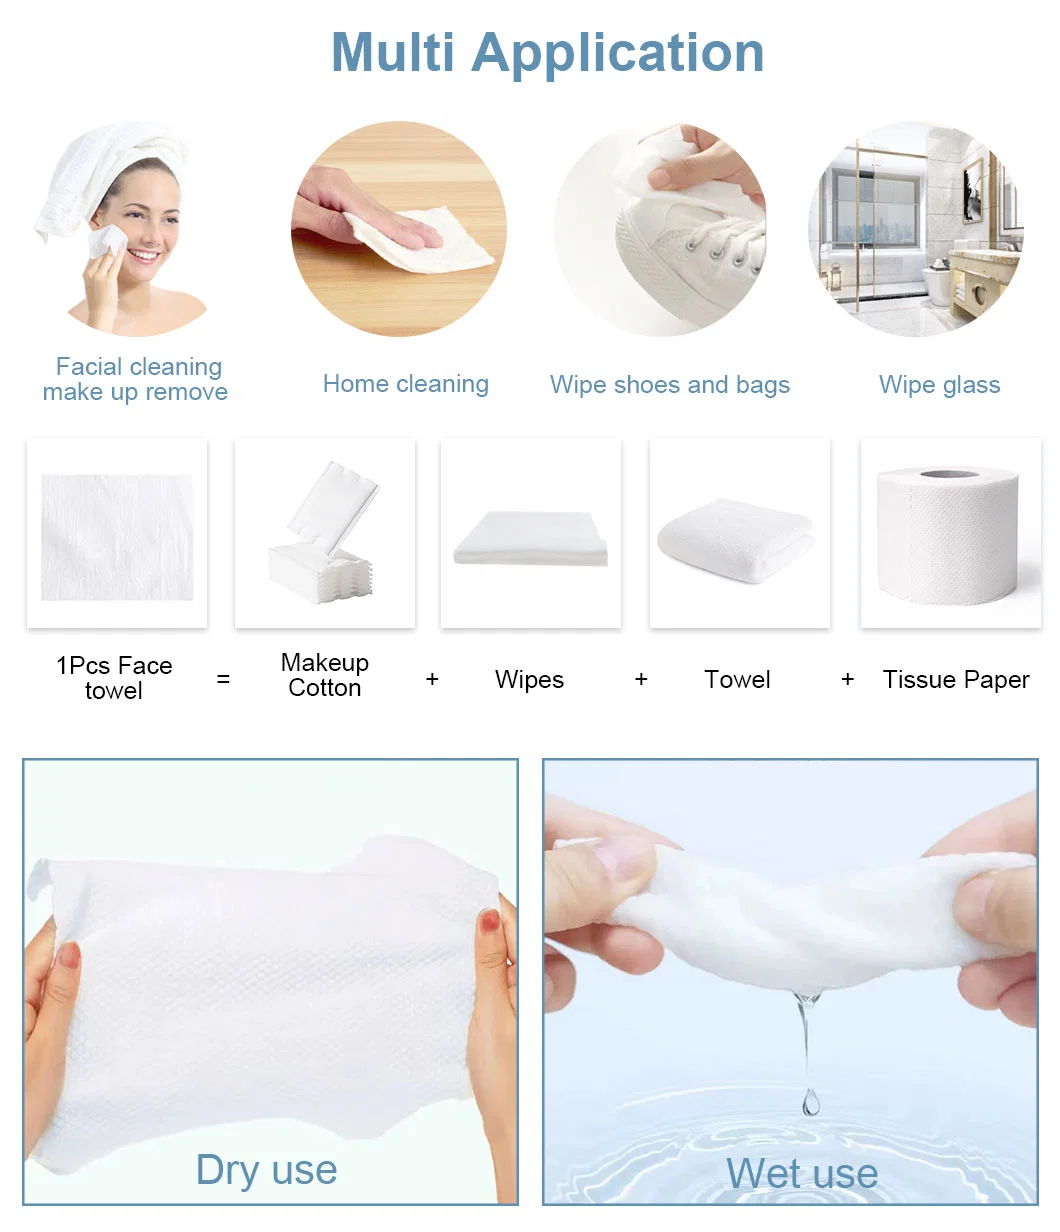 Kakama Customized Hot Sale Cotton Soft Biodegradable Disposable Nonwoven Face Facial Towel